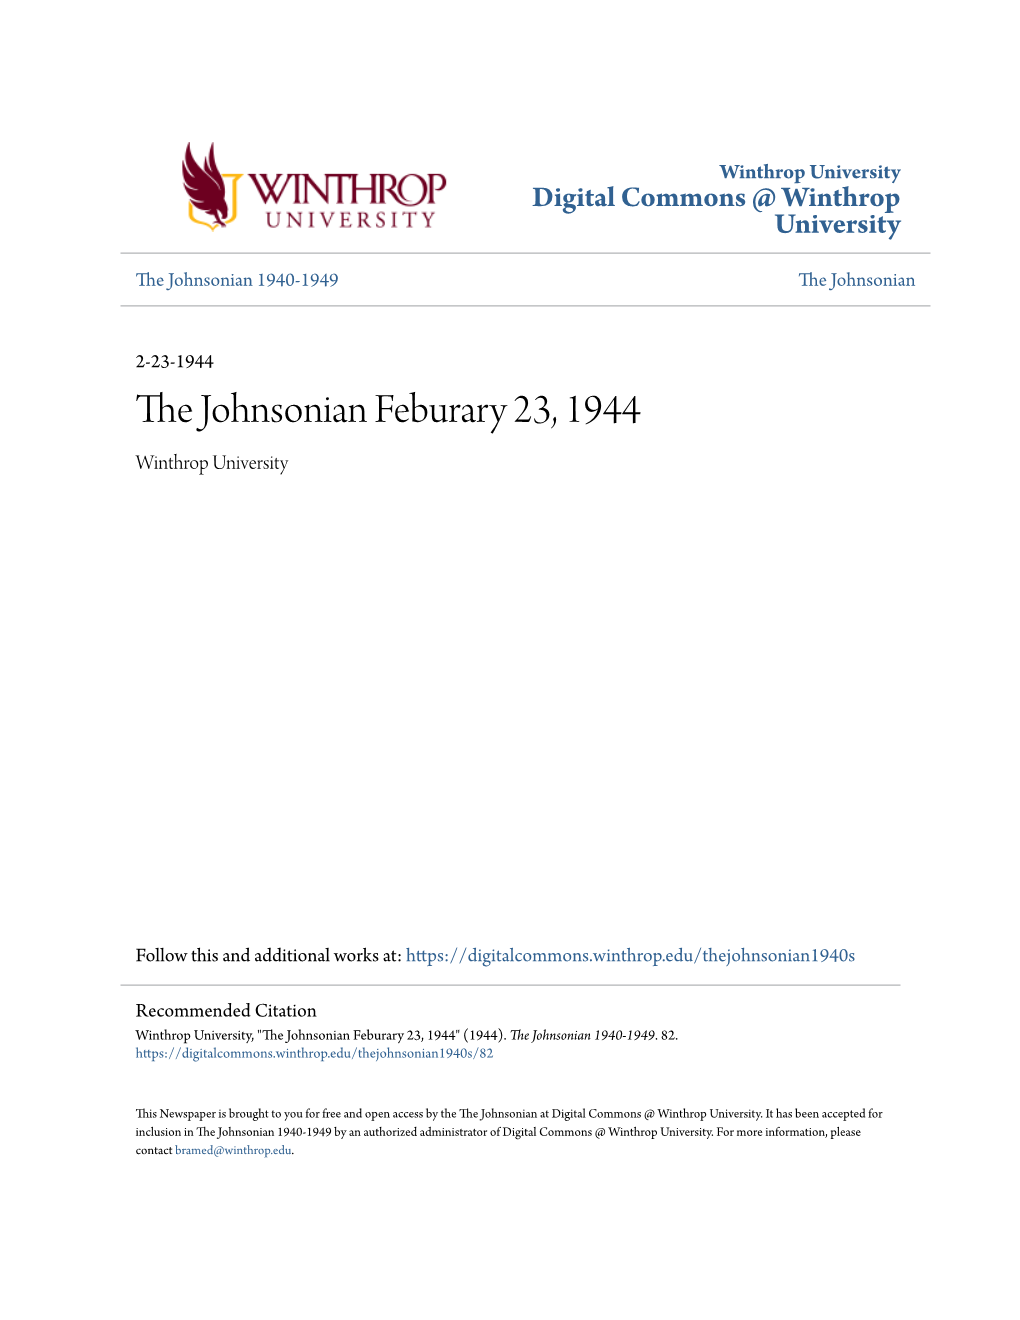 The Johnsonian Feburary 23, 1944